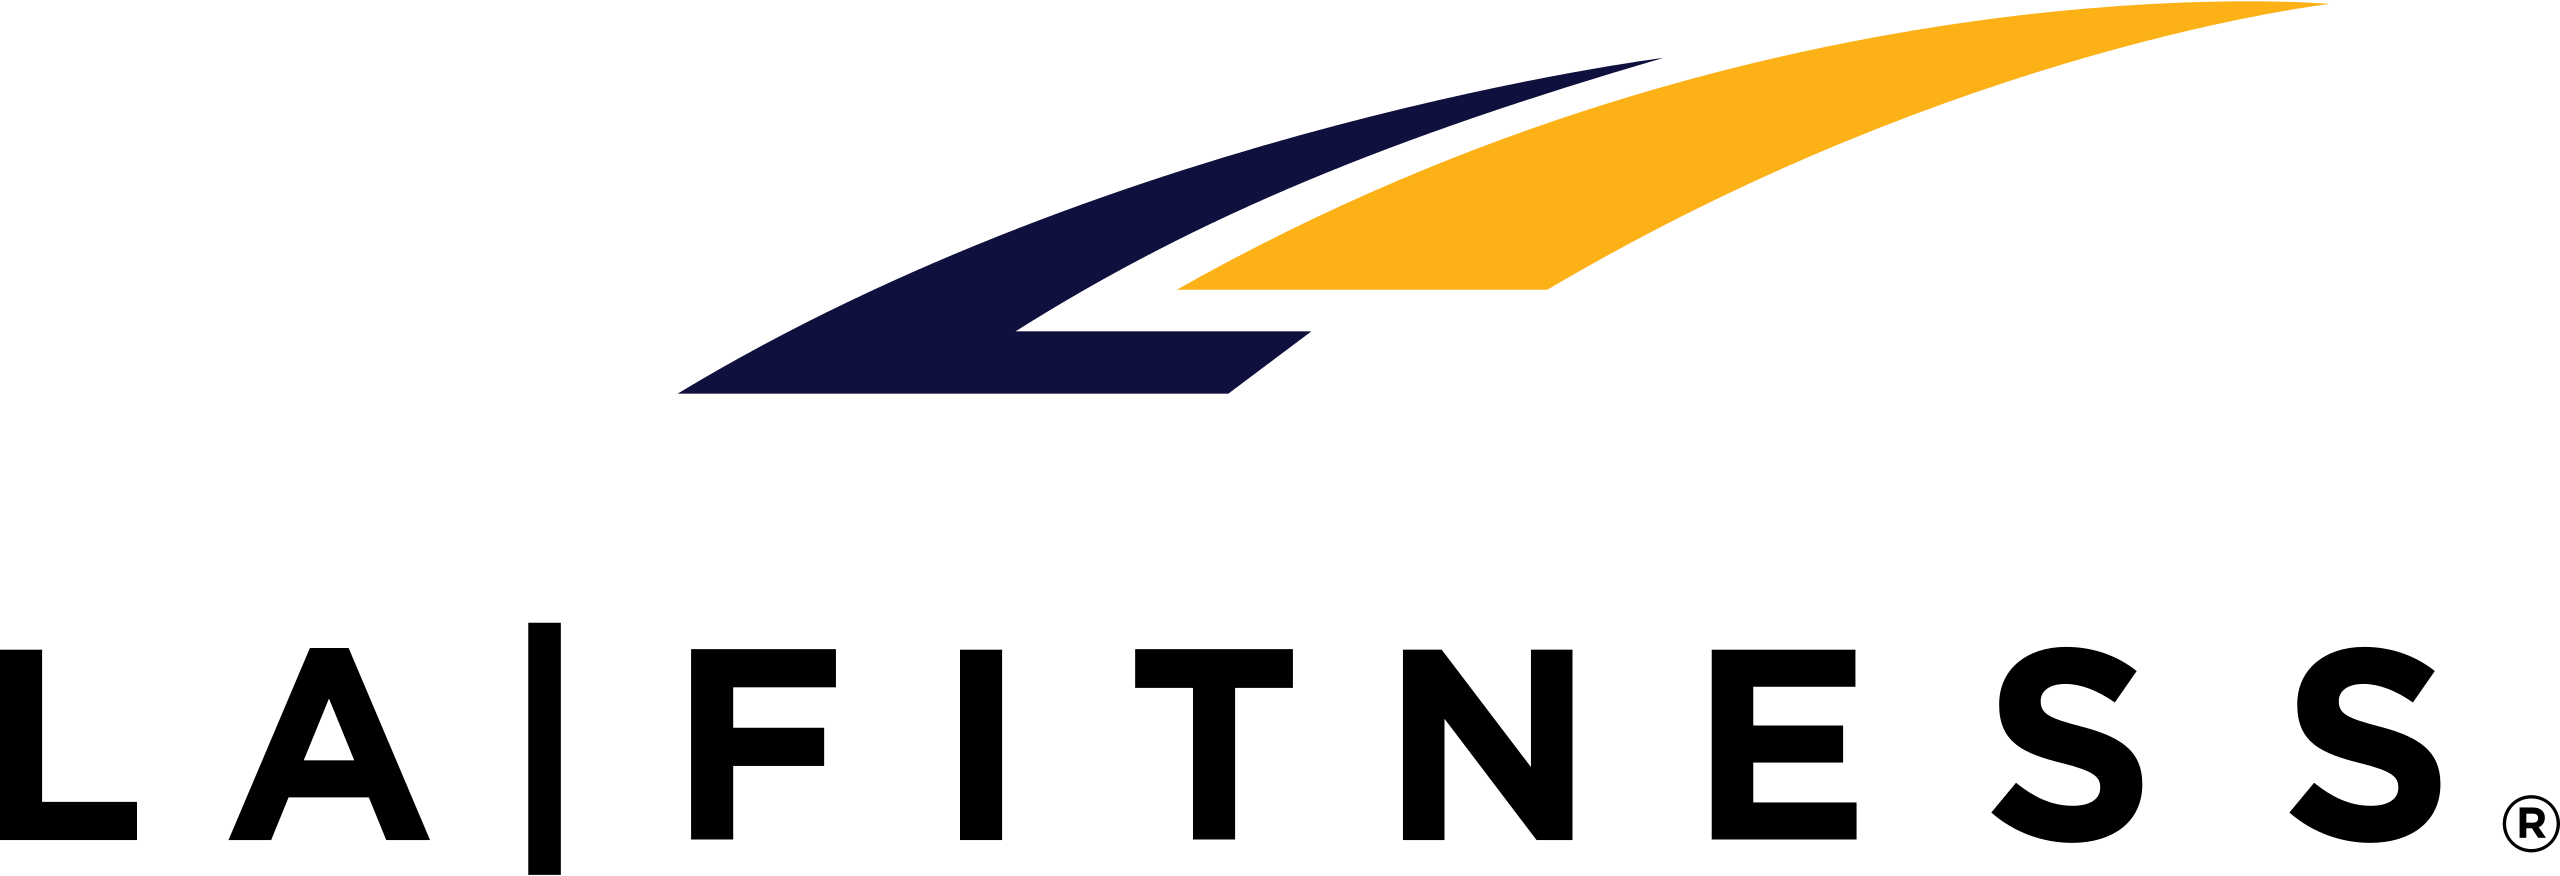 File:LA Fitness logo.svg - Wikipedia